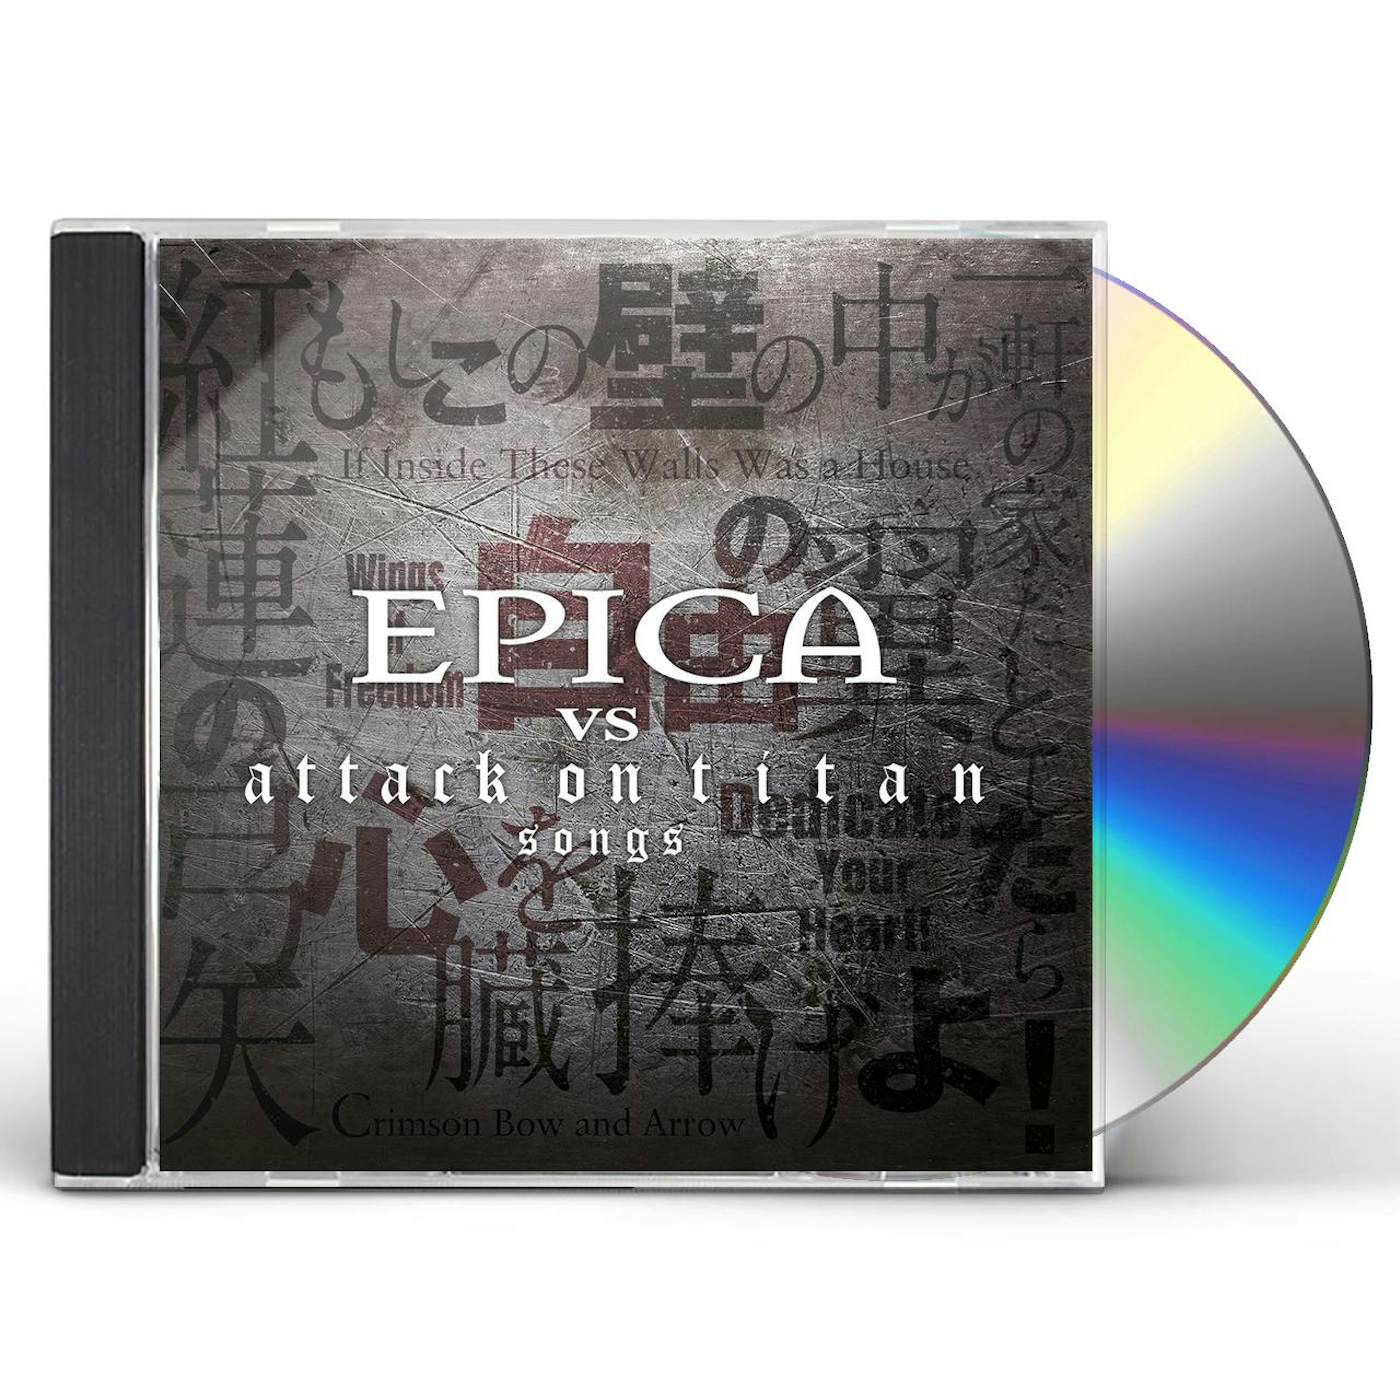 EPICA VS ATTACK ON TITAN SONGS CD